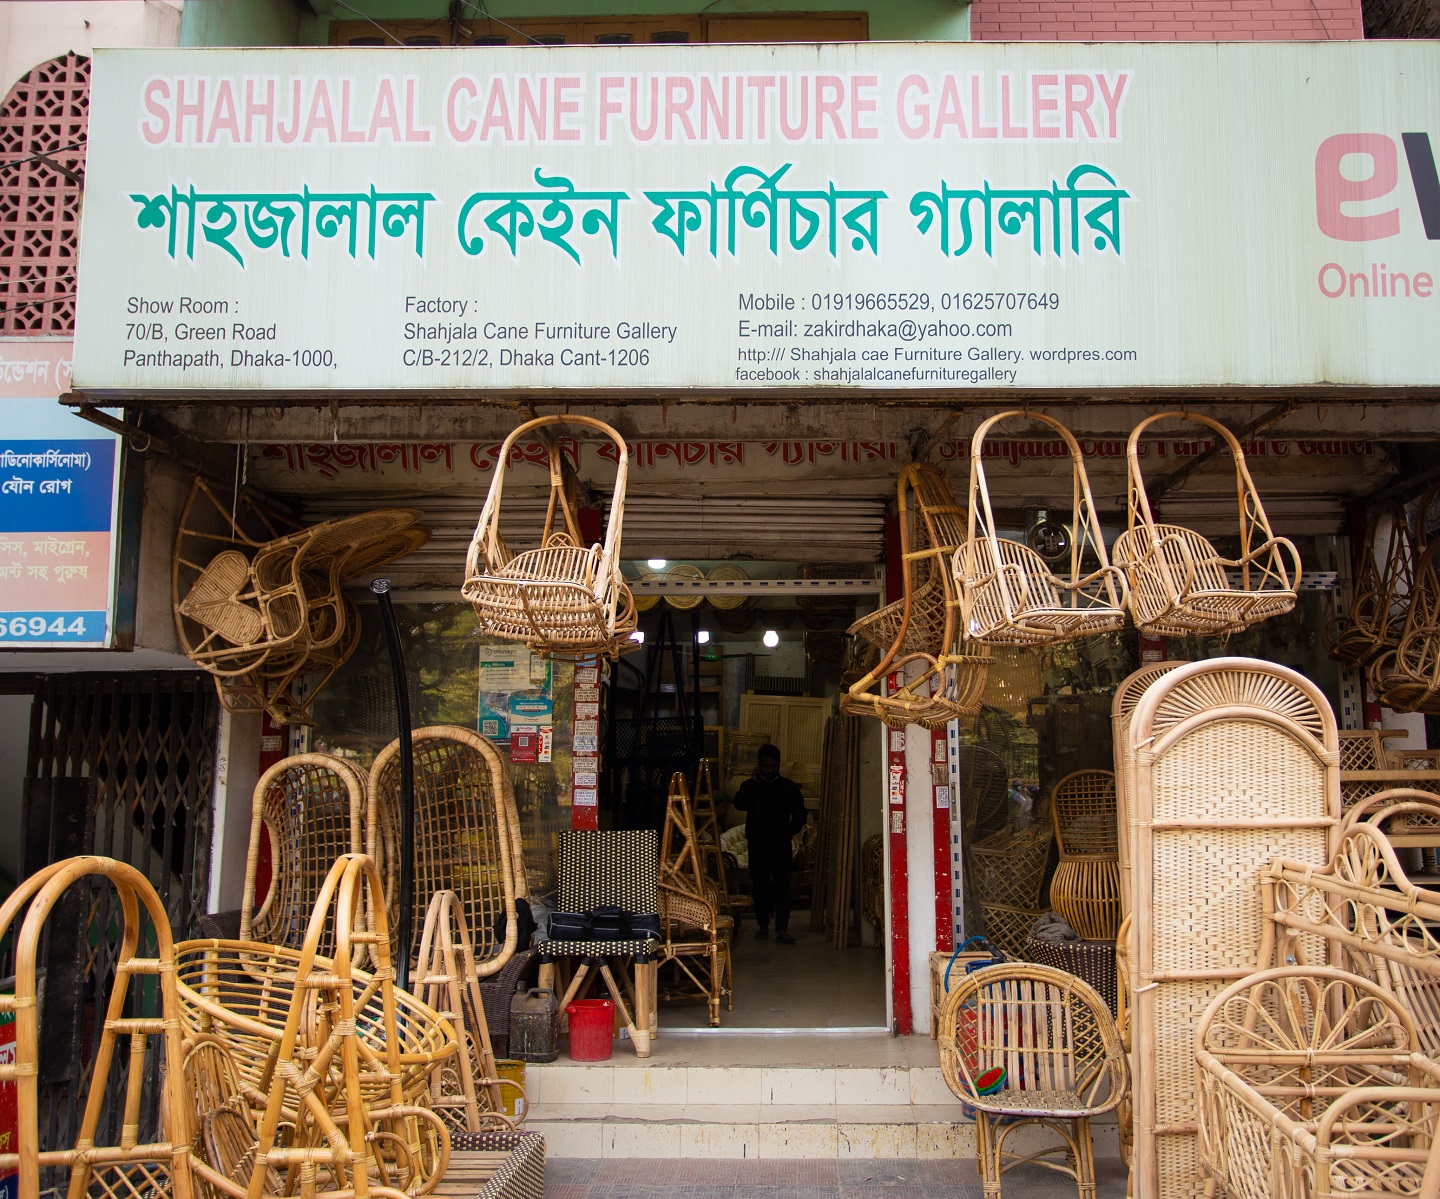 Where to find cane furniture in Dhaka